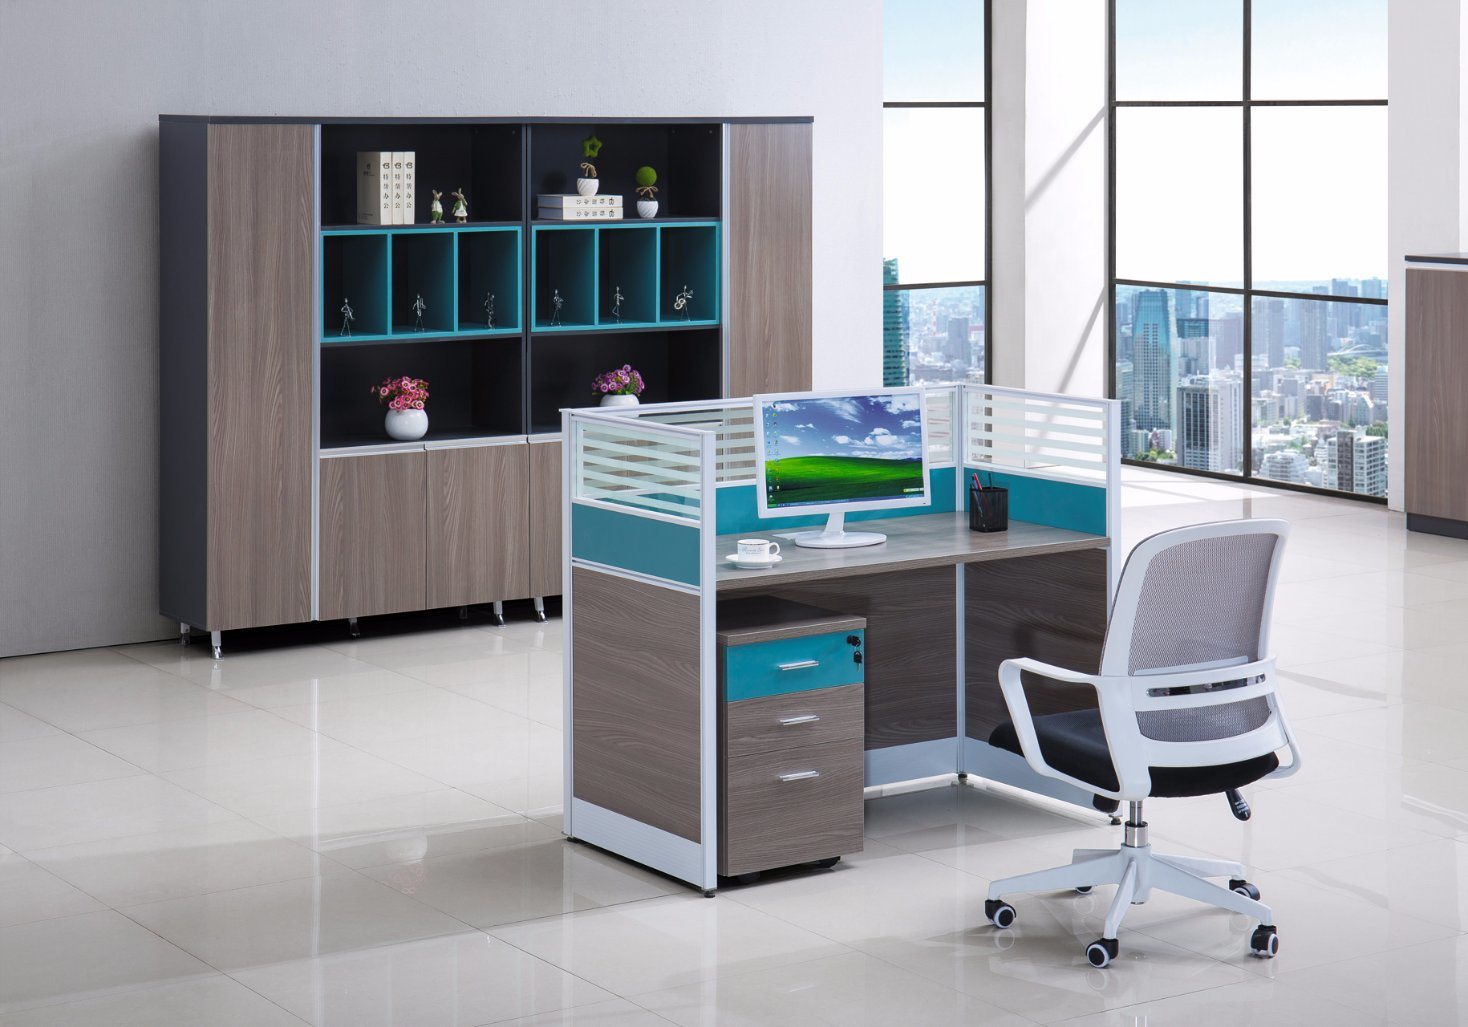 1 Seat Office Reception Area Seating Home Furniture Ergonomic Desk